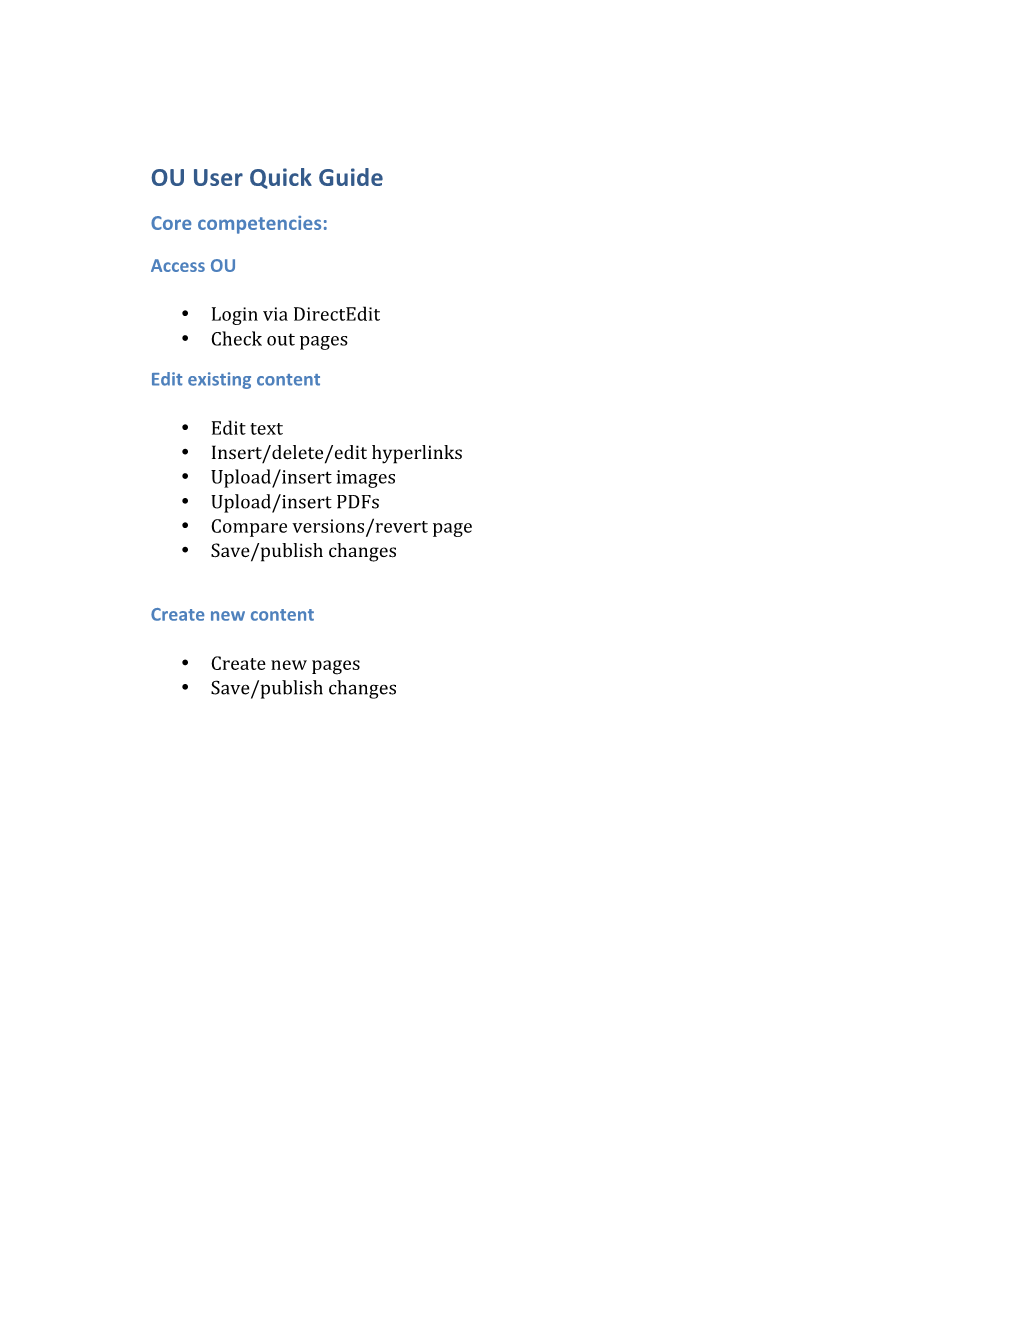 OU User Quick Guide Core Competencies